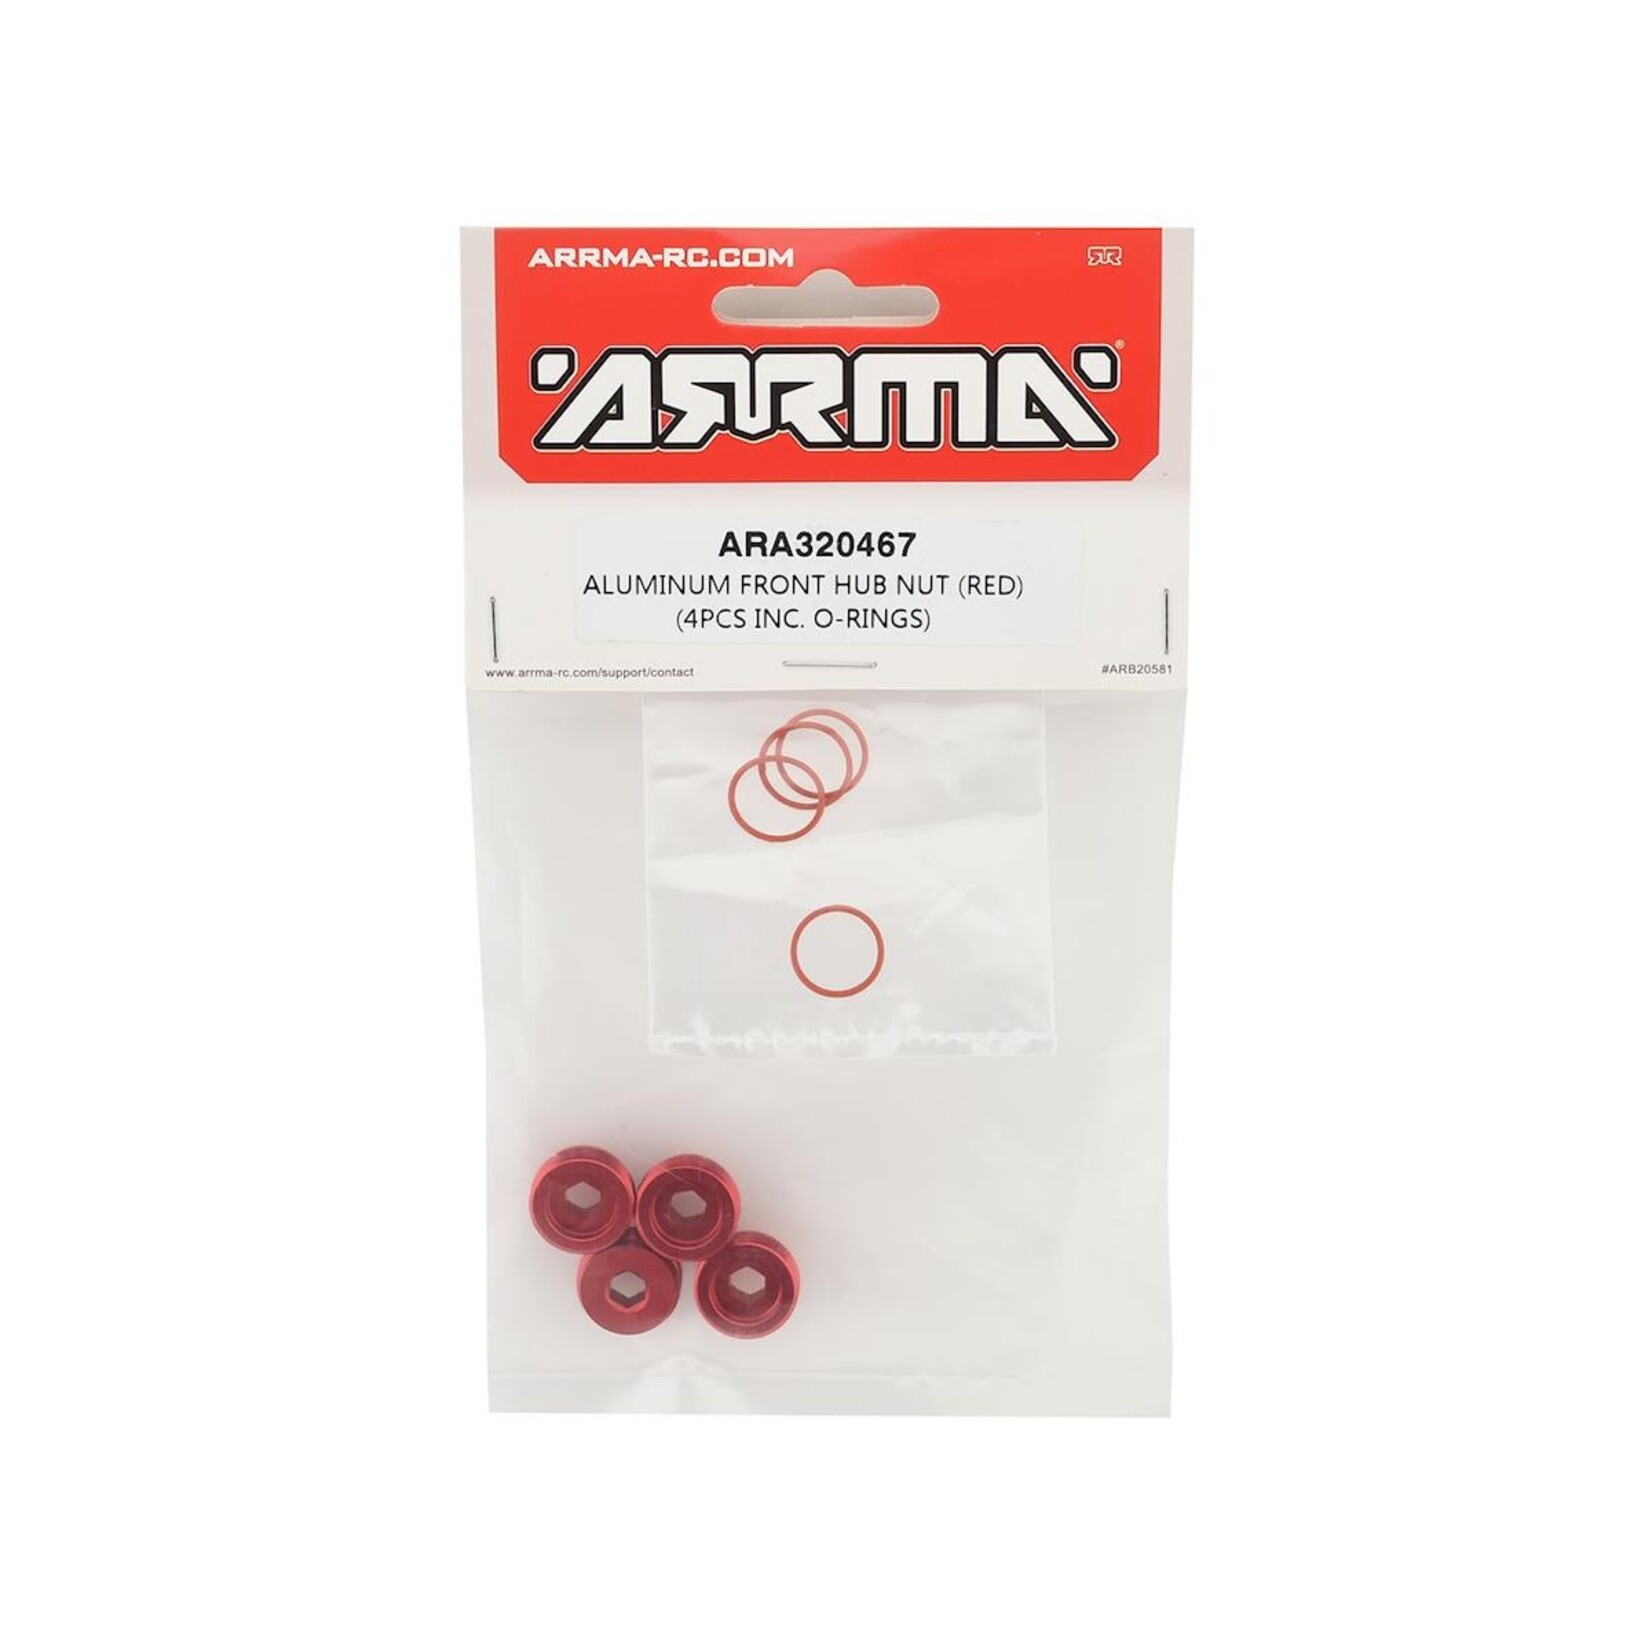 ARRMA Arrma Aluminum Front Hub Nut (Red) (4) #ARA320467